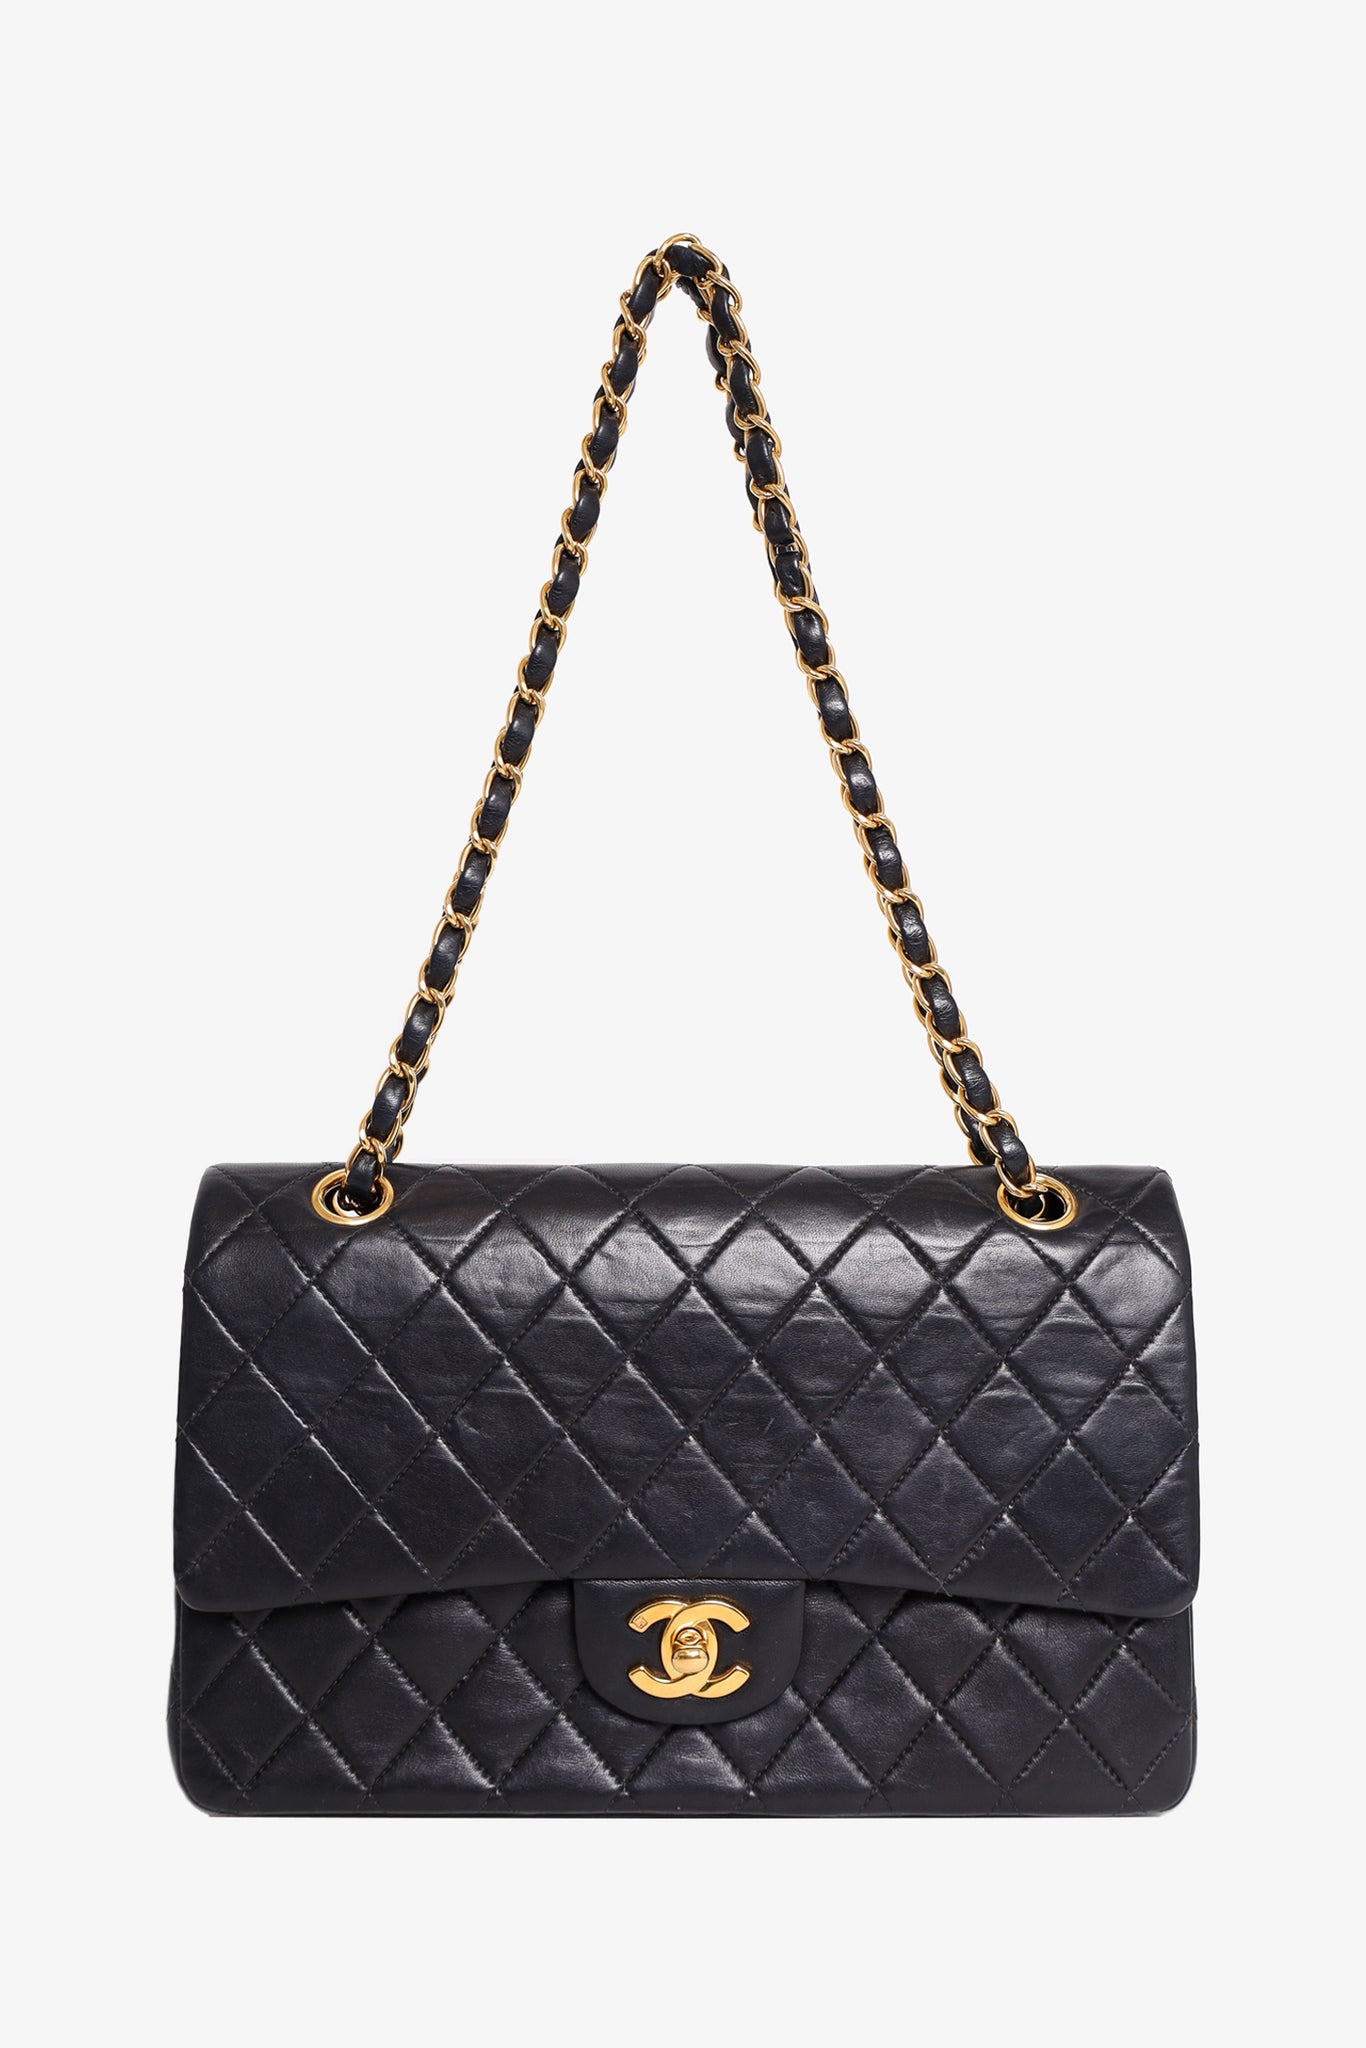 Chanel. Secondhand designer luxury resale.